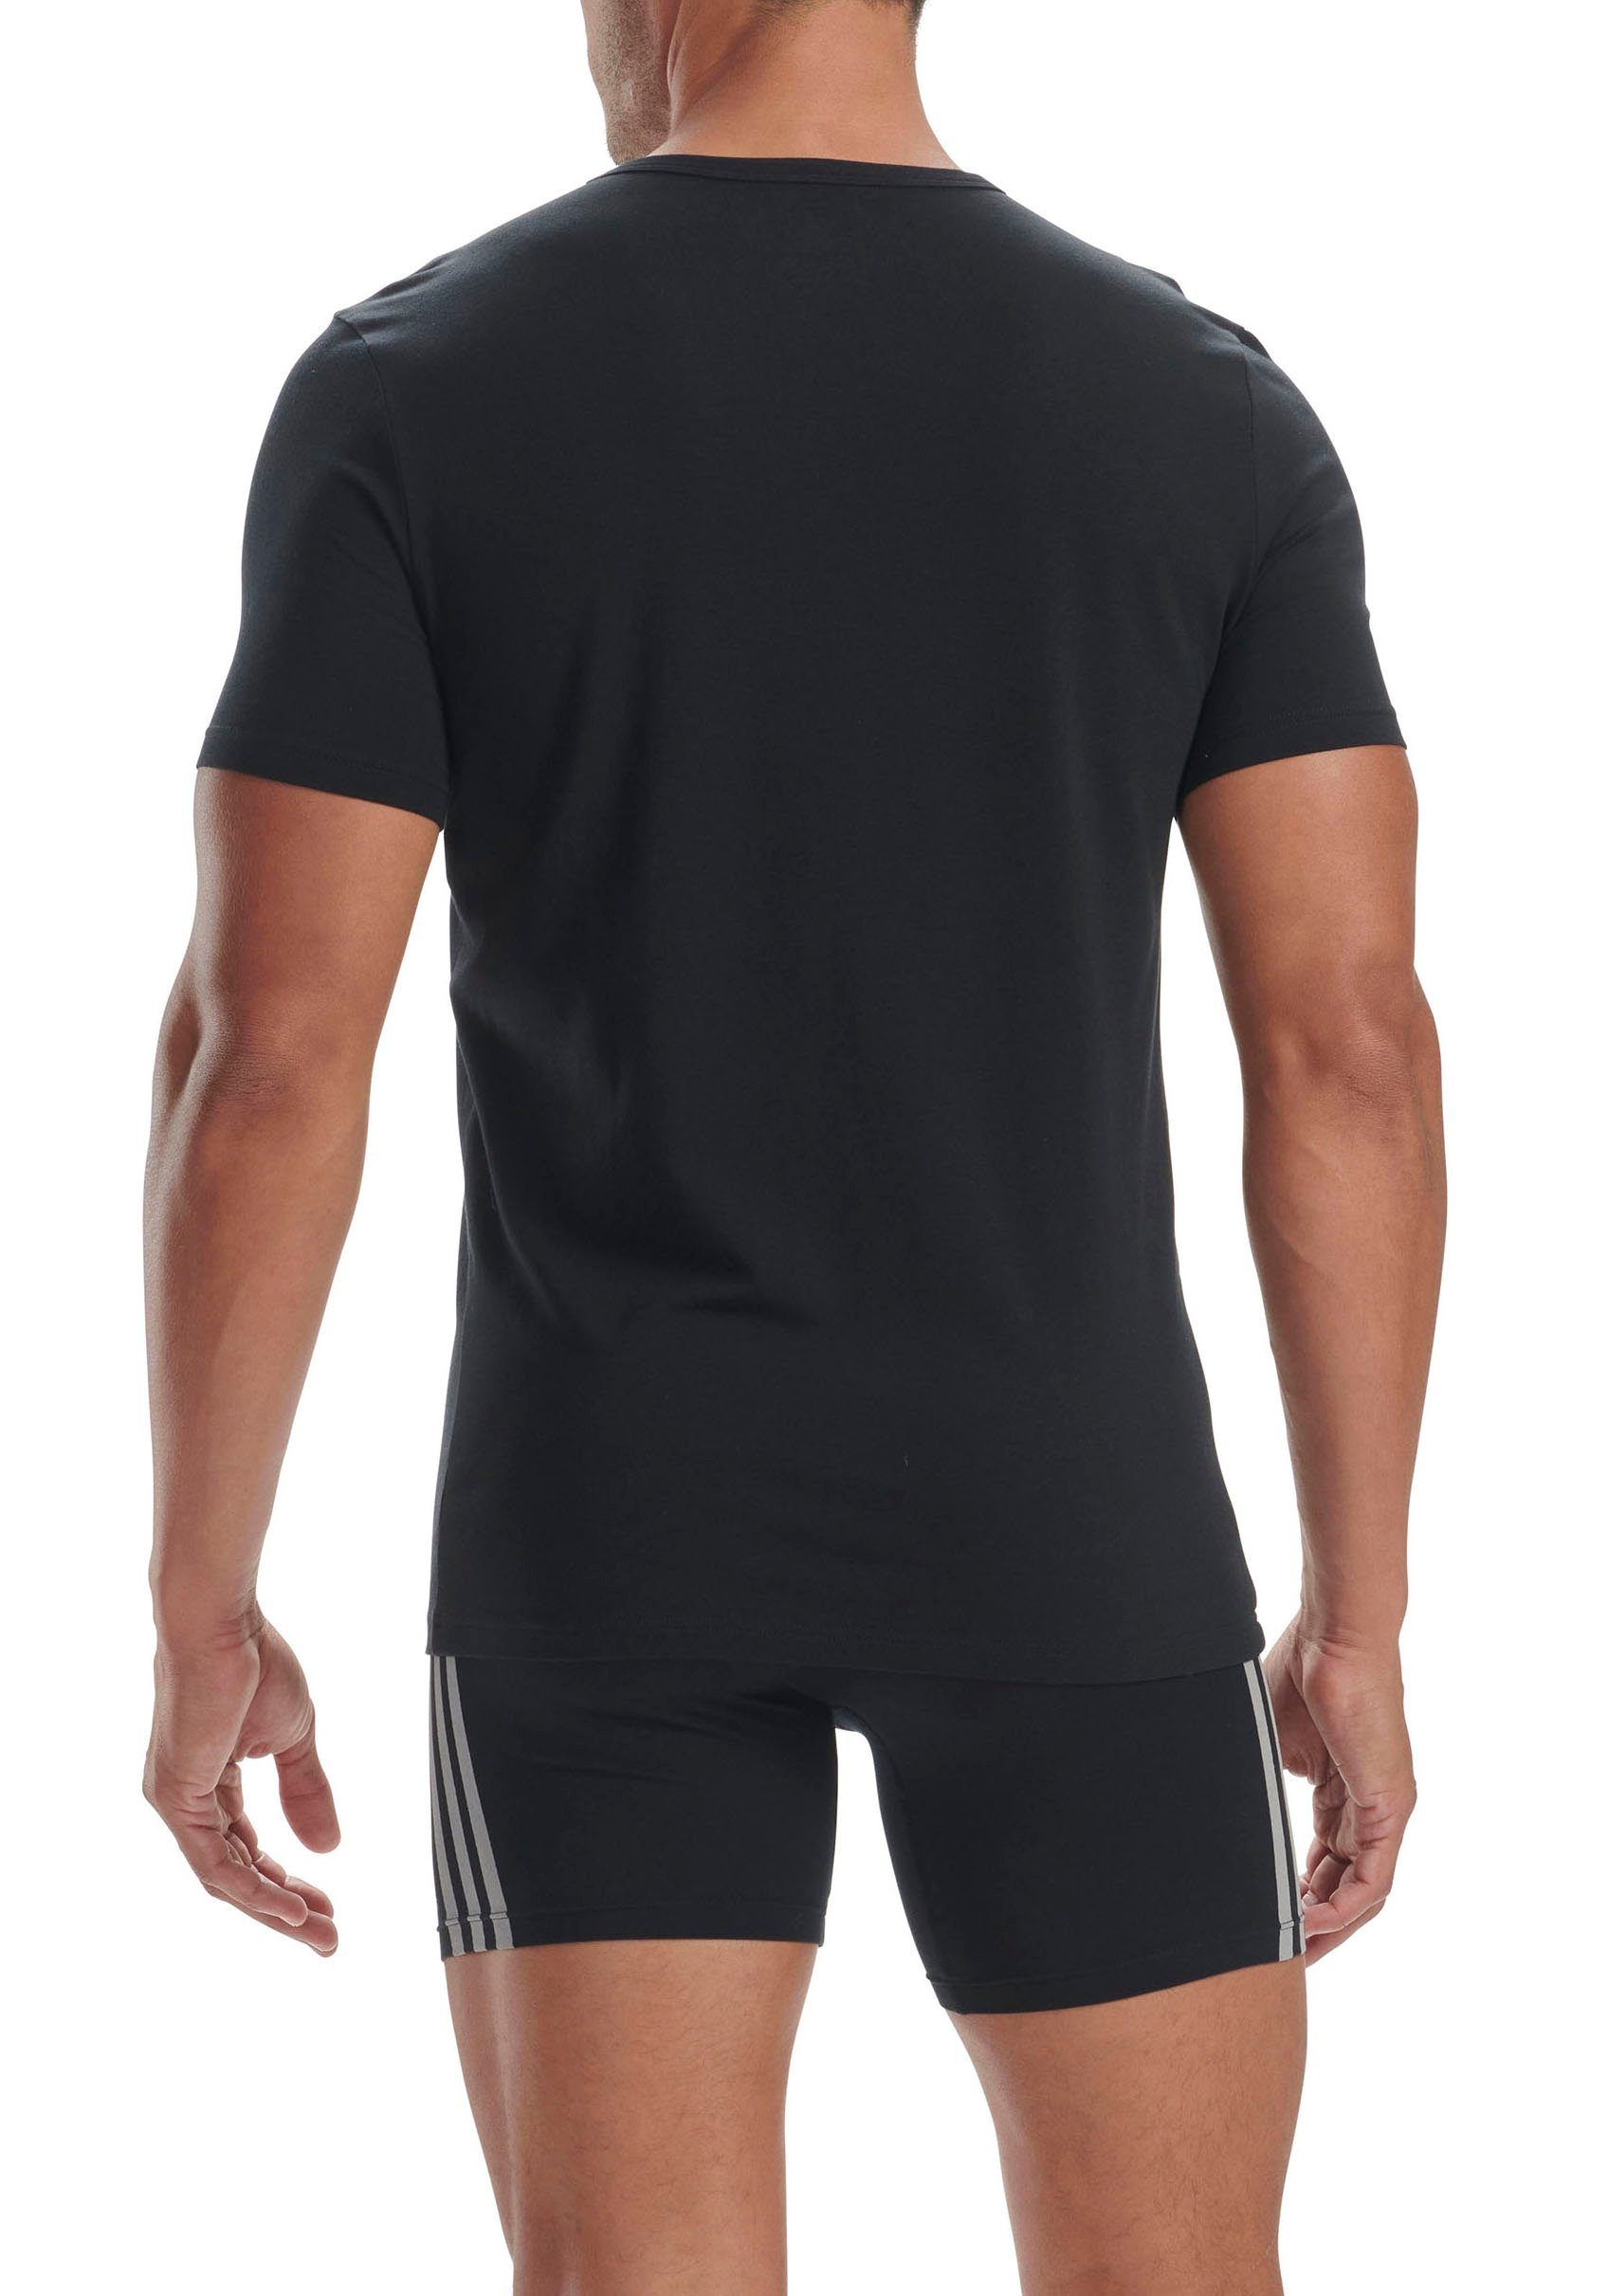 Way adidas Performance flexiblem Unterhemd T-Shirt V-Neck 4 schwarz Sportswear adidas (2er-Pack) mit Stretch